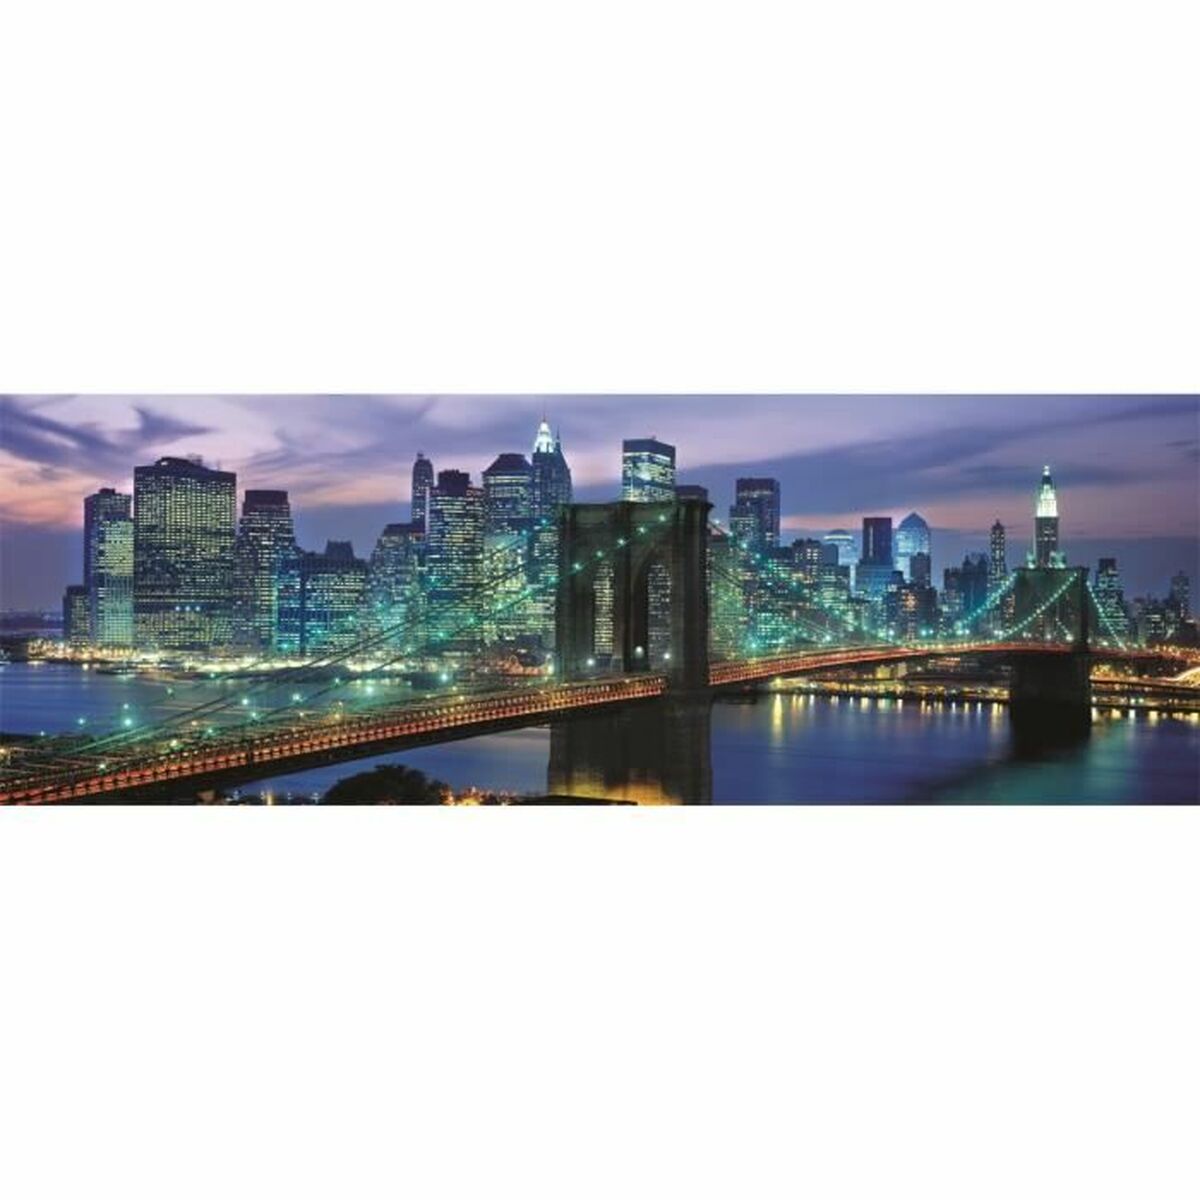 Puzzel Clementoni Panorama New York 1000 Onderdelen